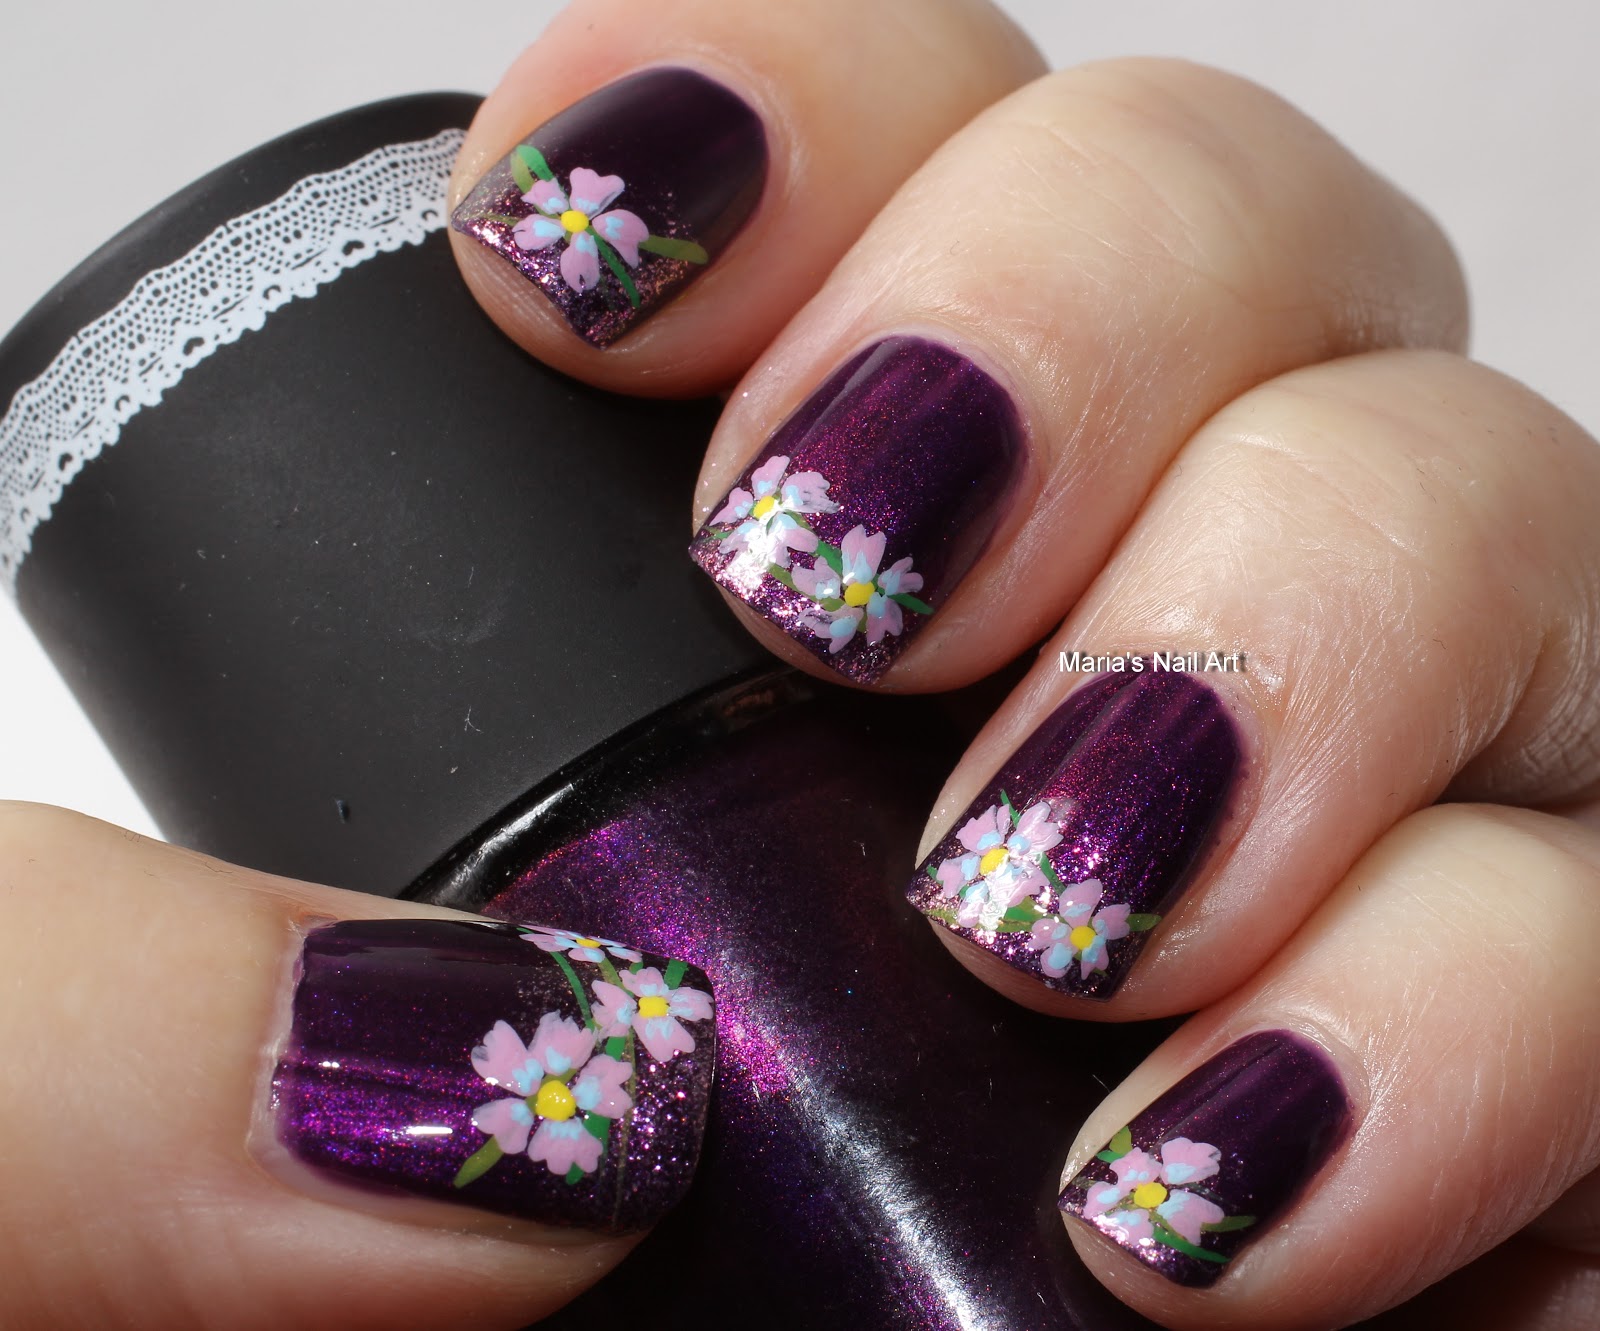 Marias Nail Art and Polish Blog: Viola's flowers